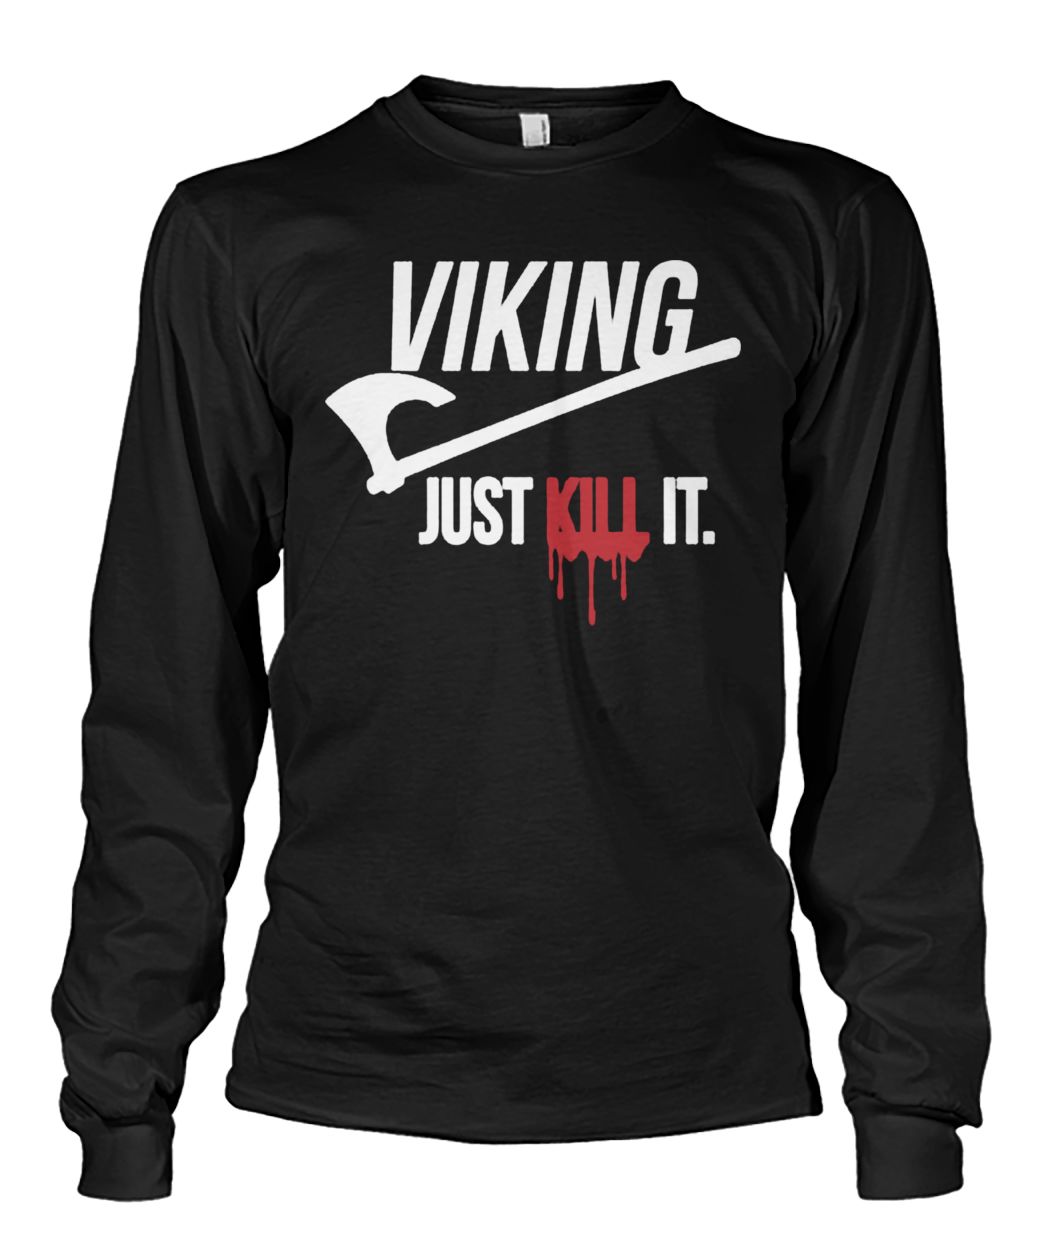 Viking just kill it unisex long sleeve